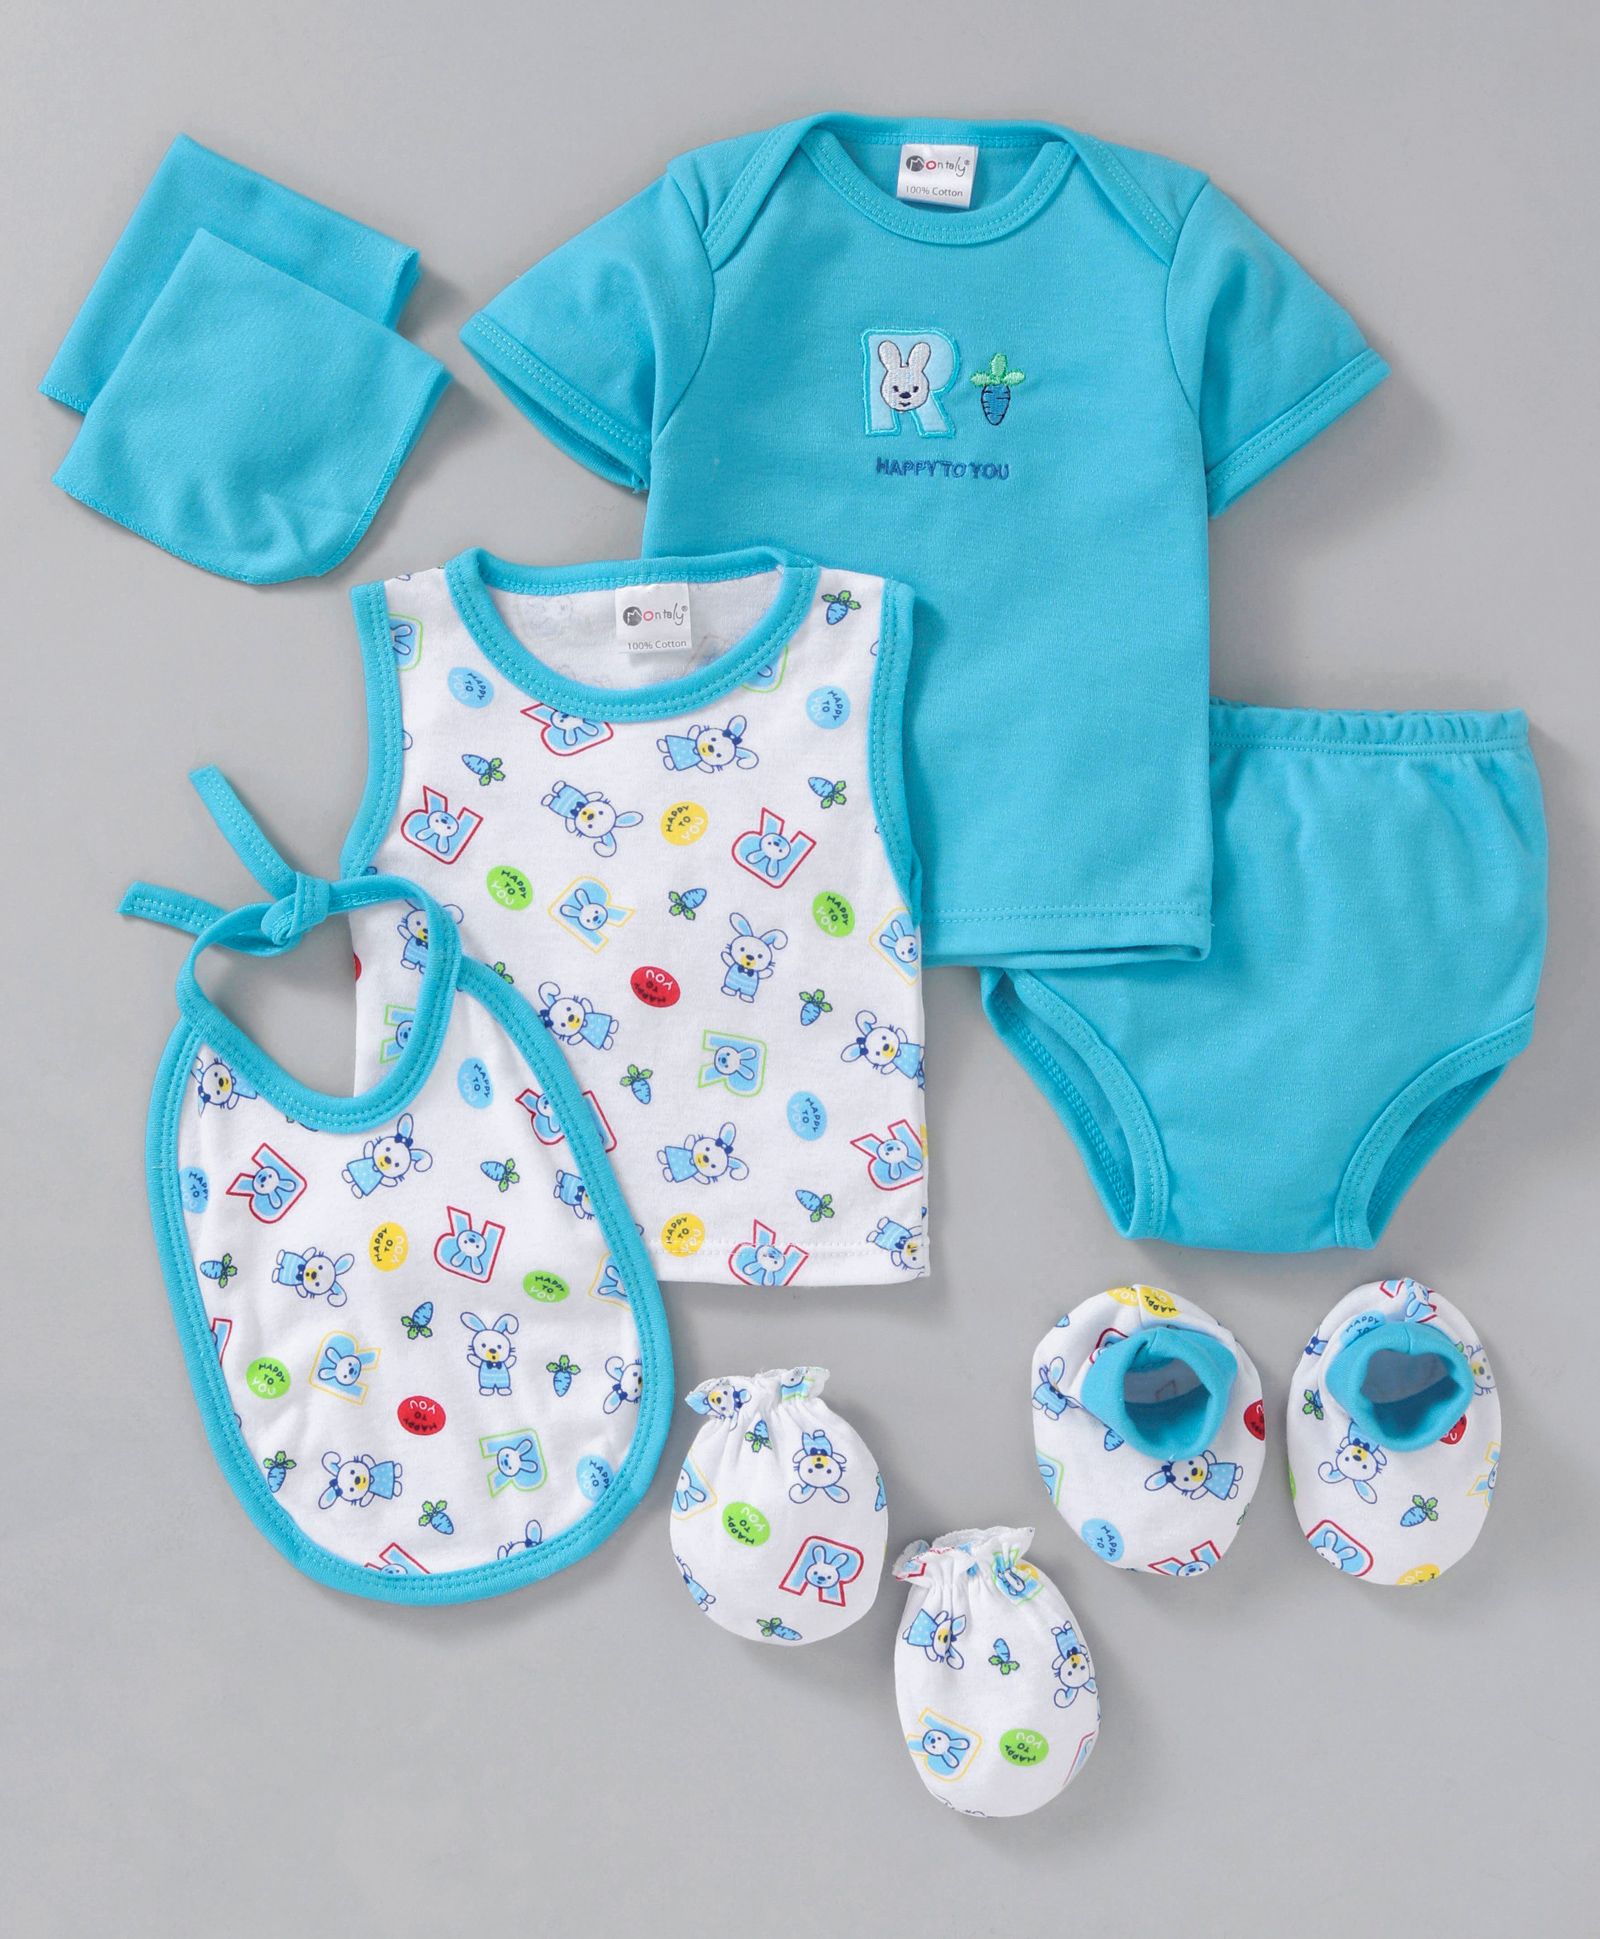 firstcry newborn baby clothes